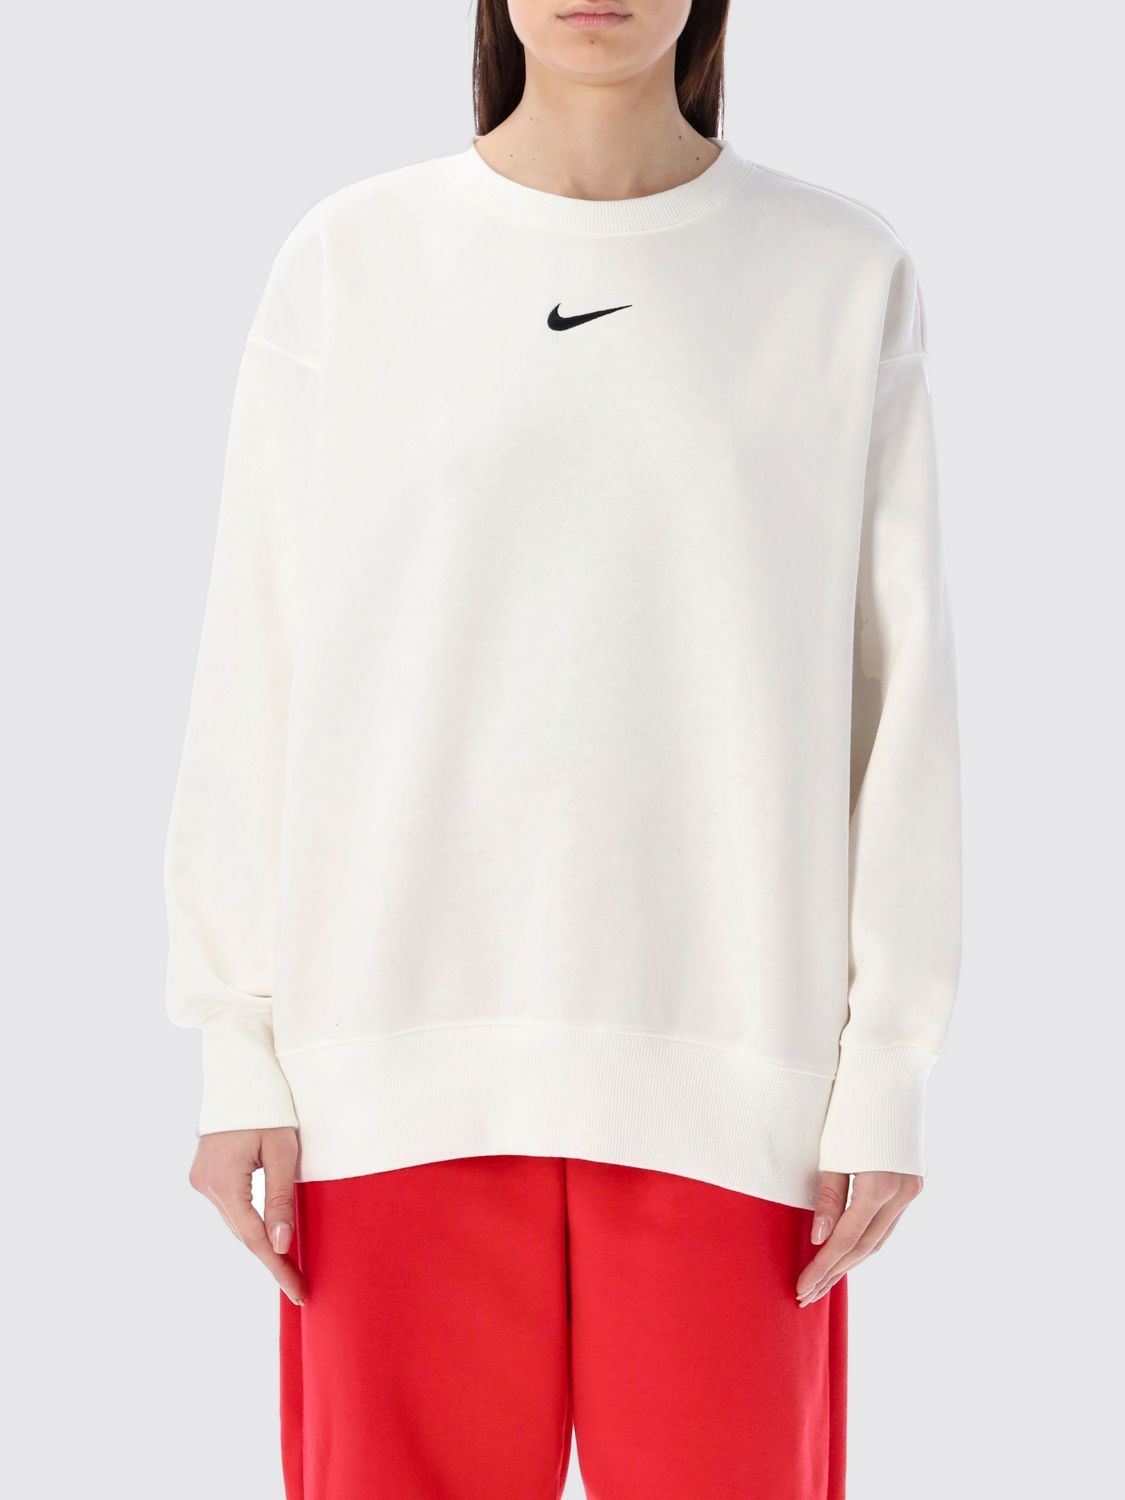 Nike Sweatshirt  Woman Color White